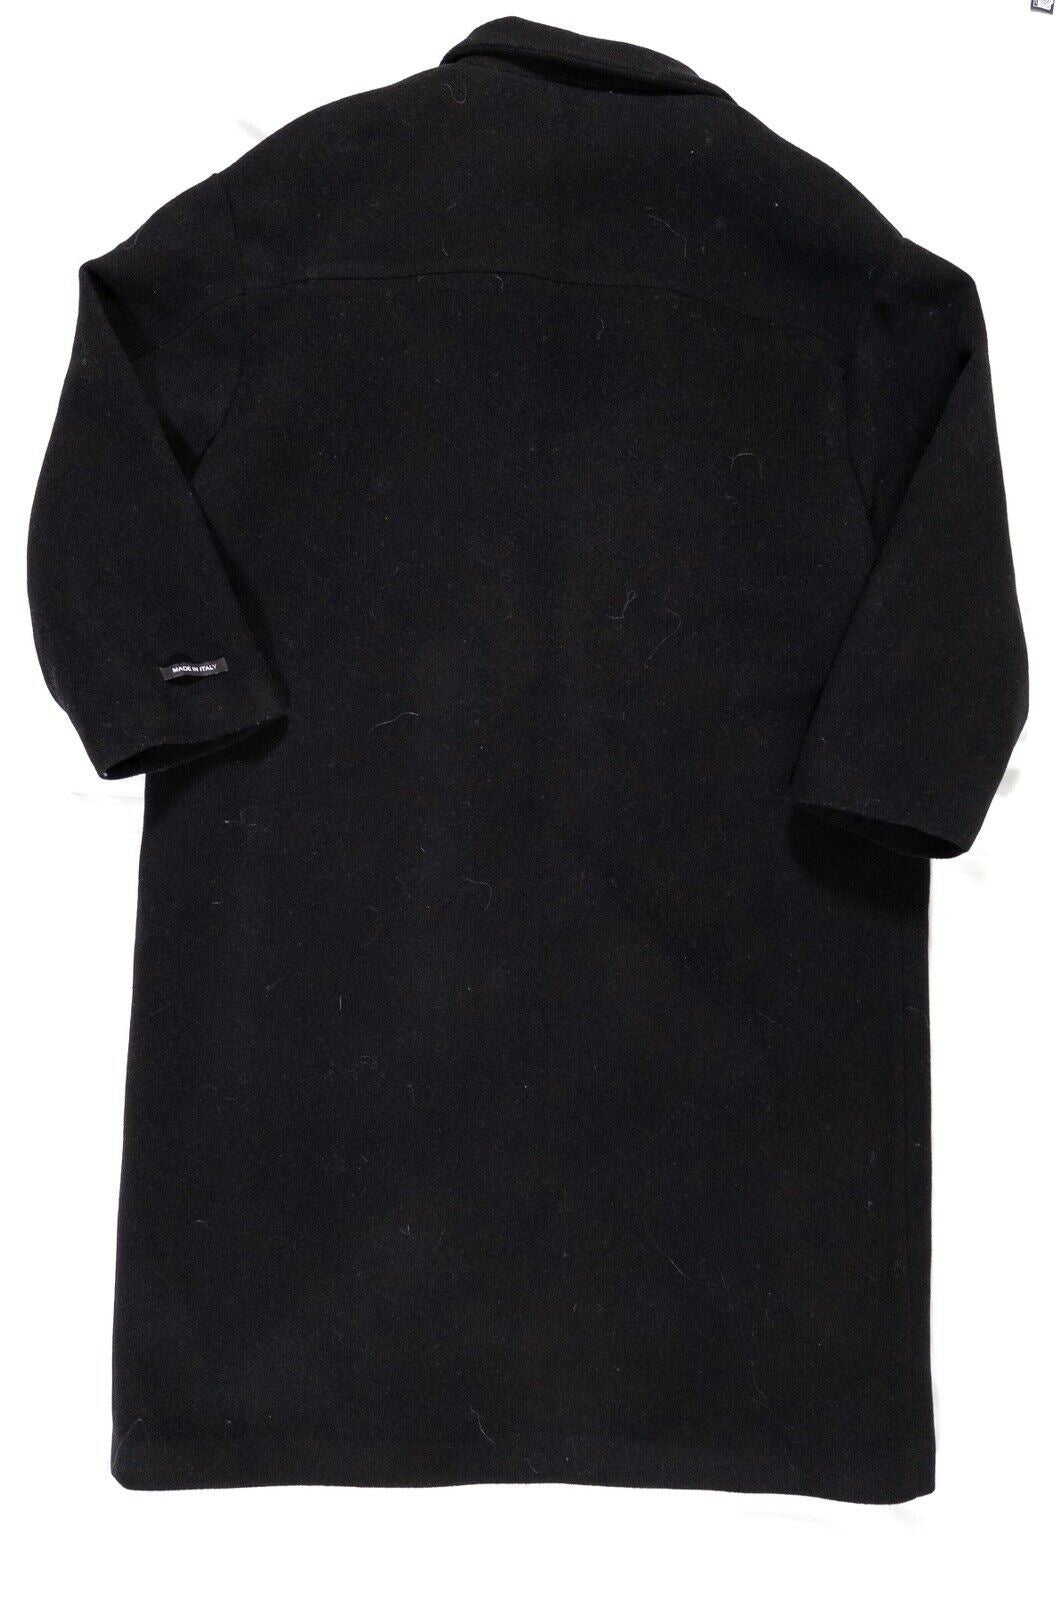 PALTO ITALIA Women's Black Wool Blend Coat Jacket Size UK 14